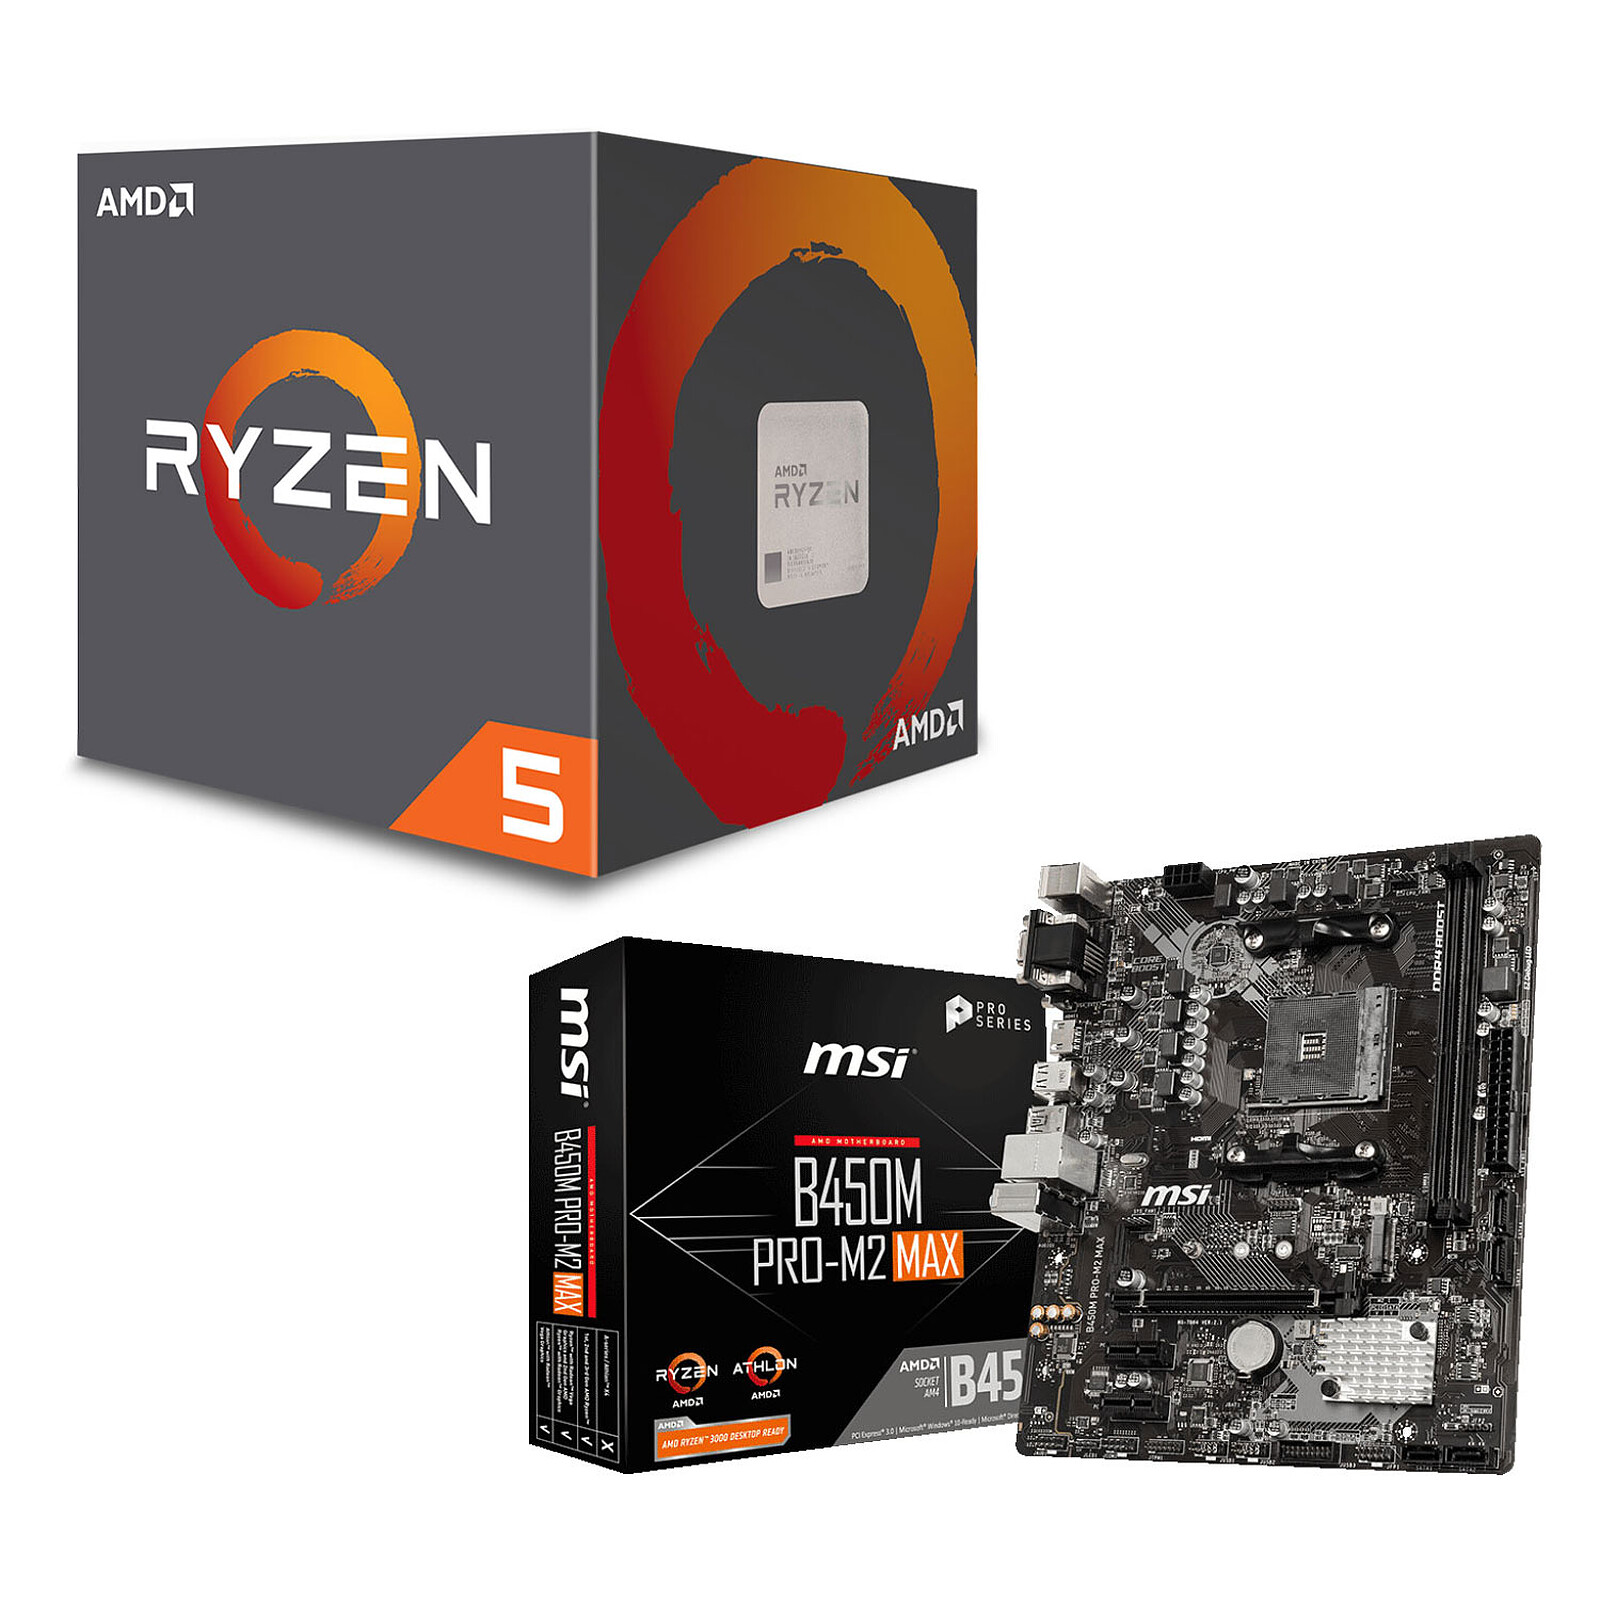 PC Upgrade Kit AMD Ryzen 5 1600 AF MSI B450M PRO-M2 MAX - Upgrade ...